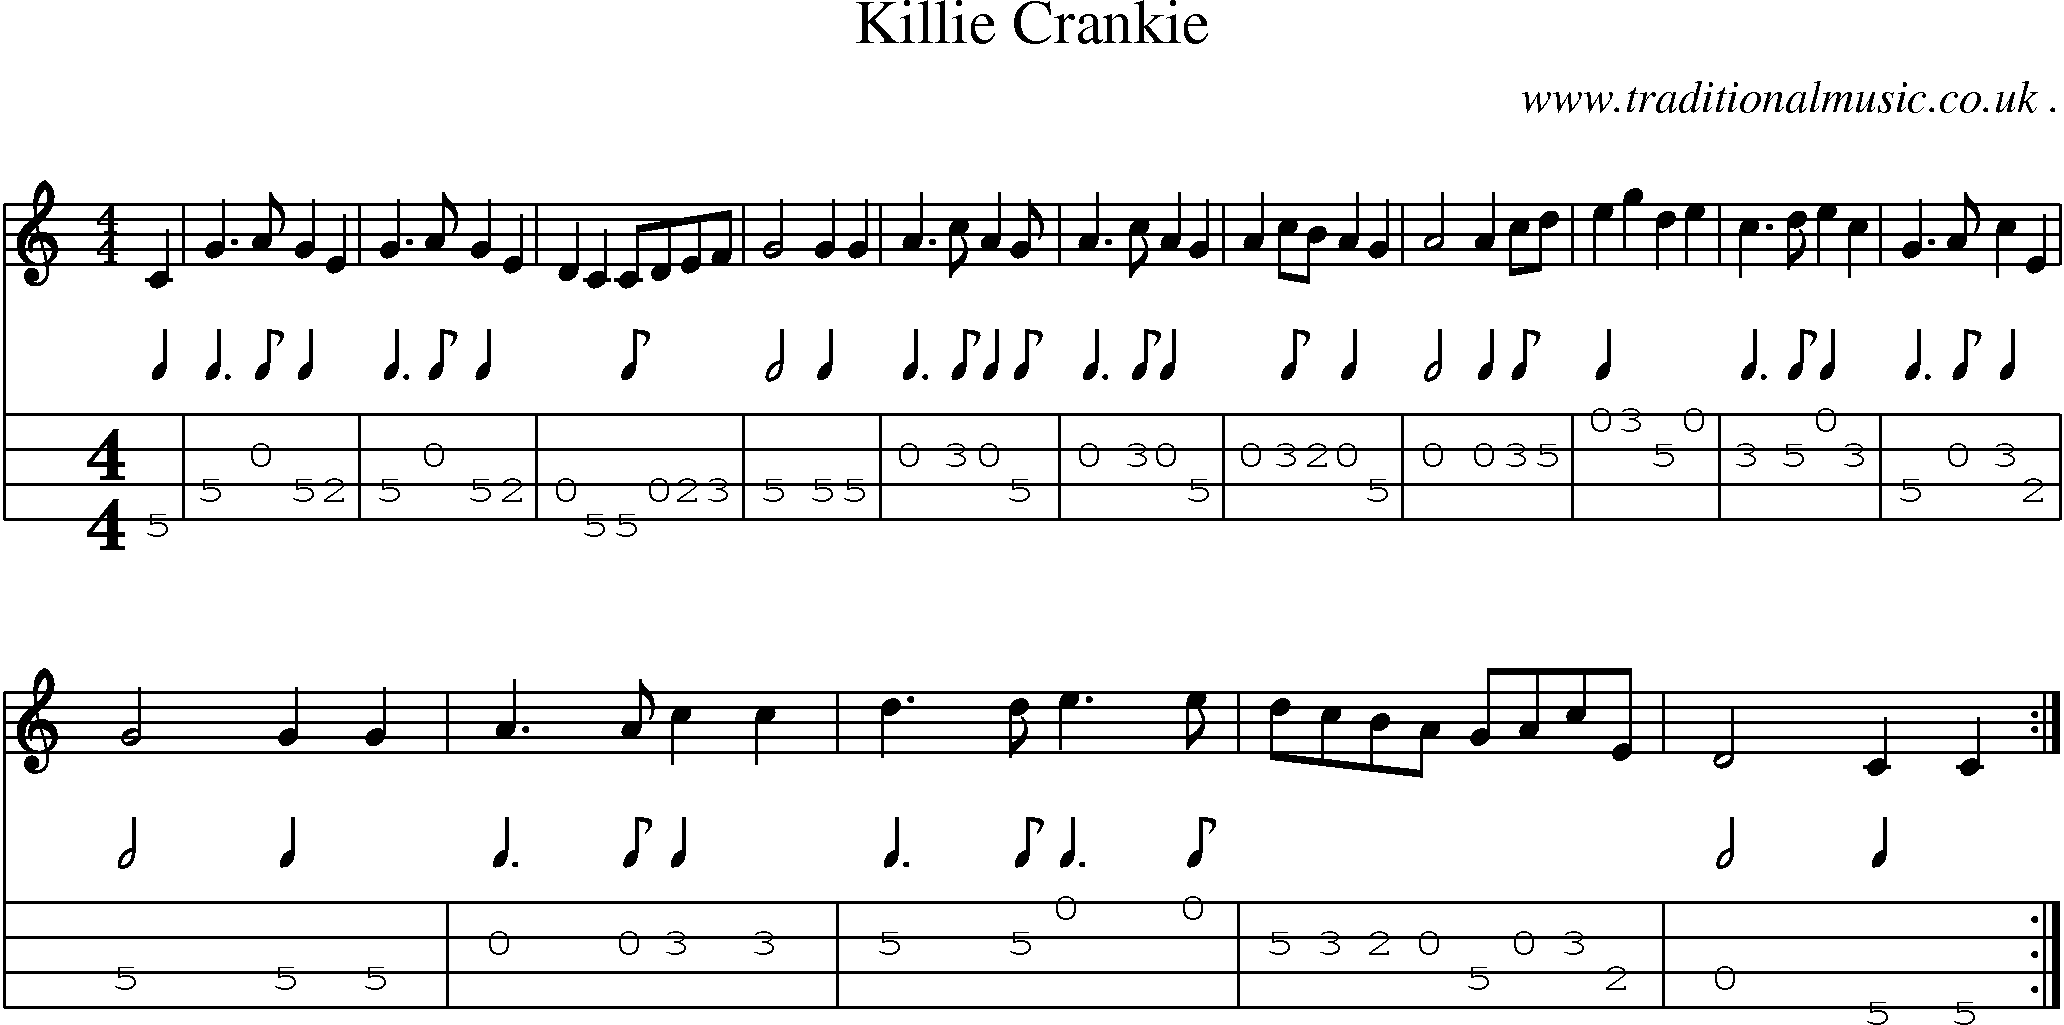 Sheet-Music and Mandolin Tabs for Killie Crankie